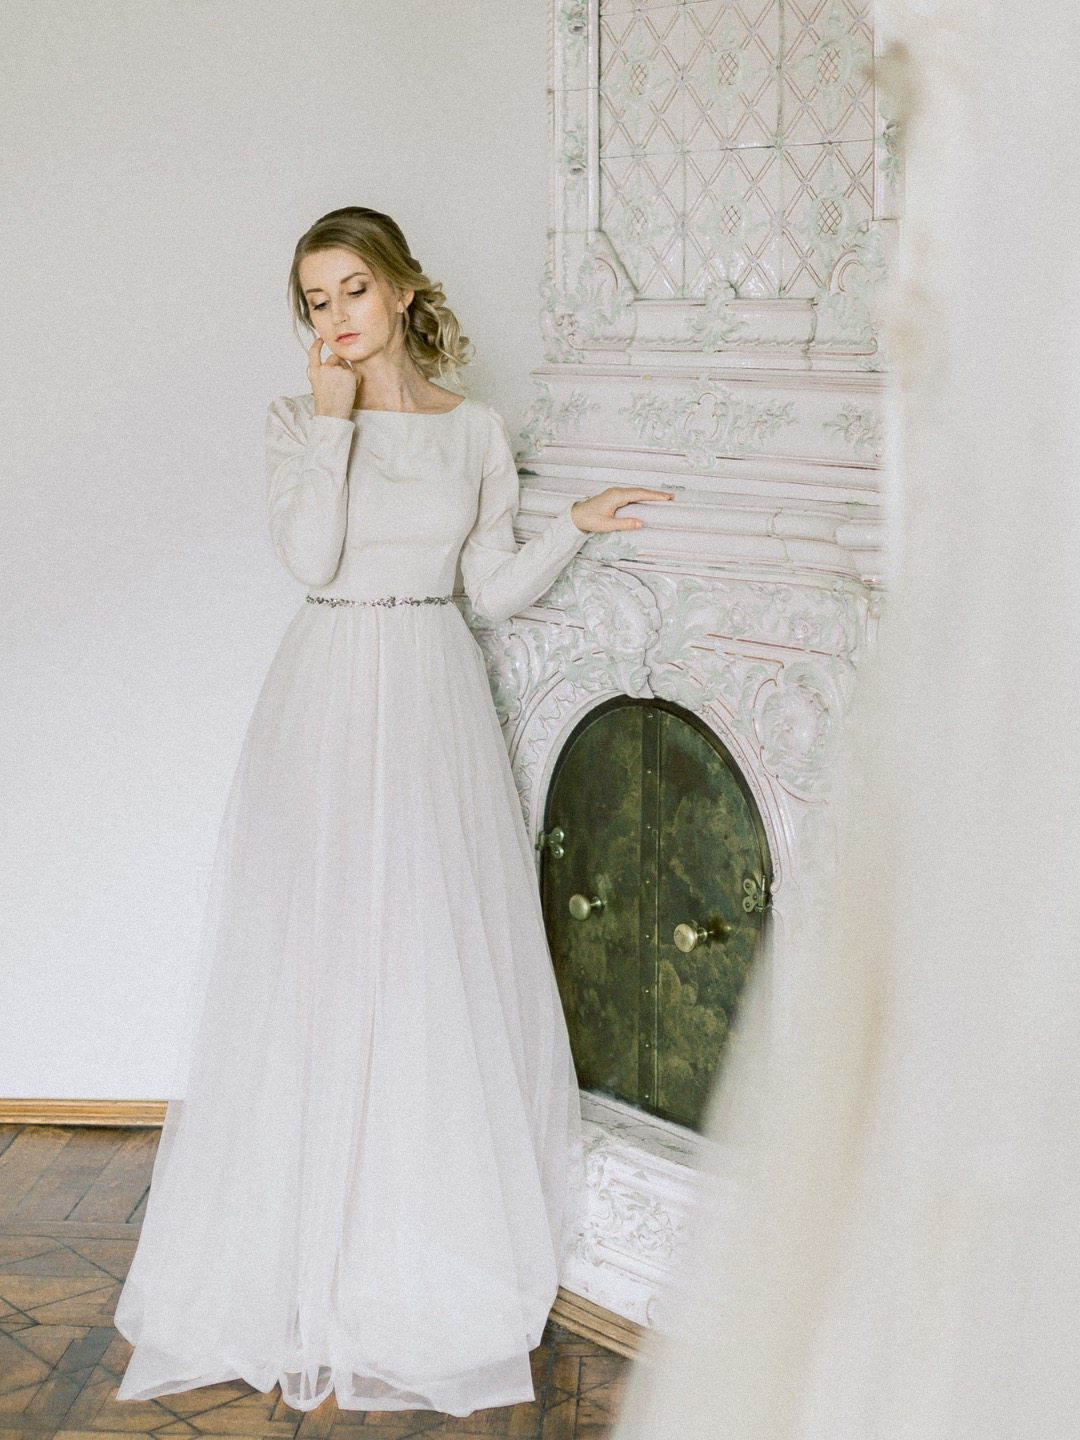 The Julia Berlinskaya inspiration dress: стилизованная фотосессия